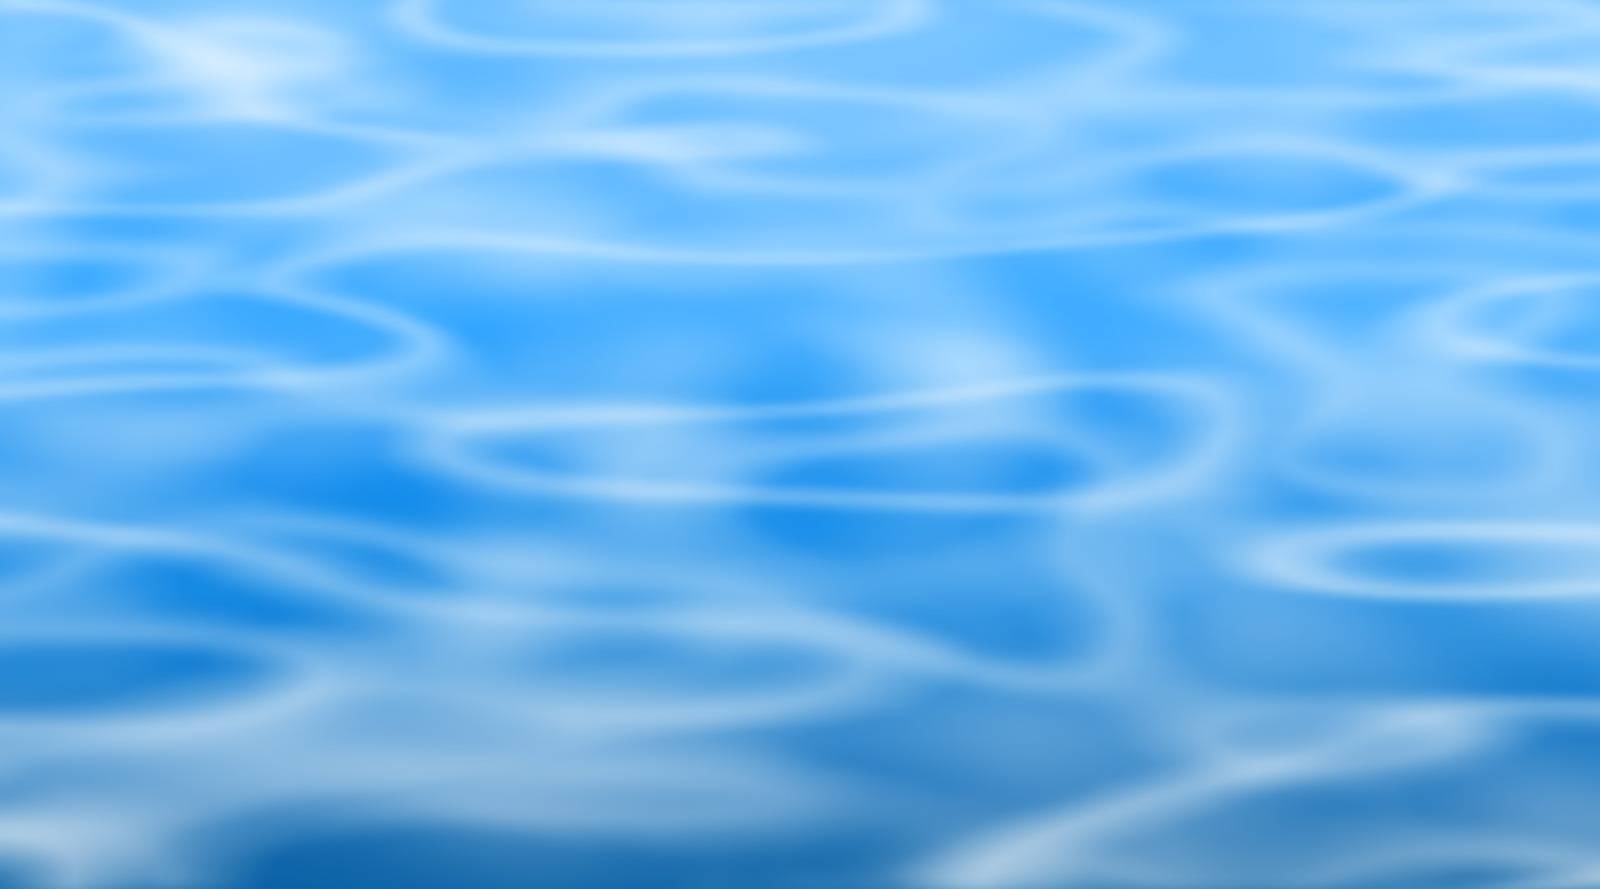 Editable vector illustration of blue ripples made using a gradient mesh